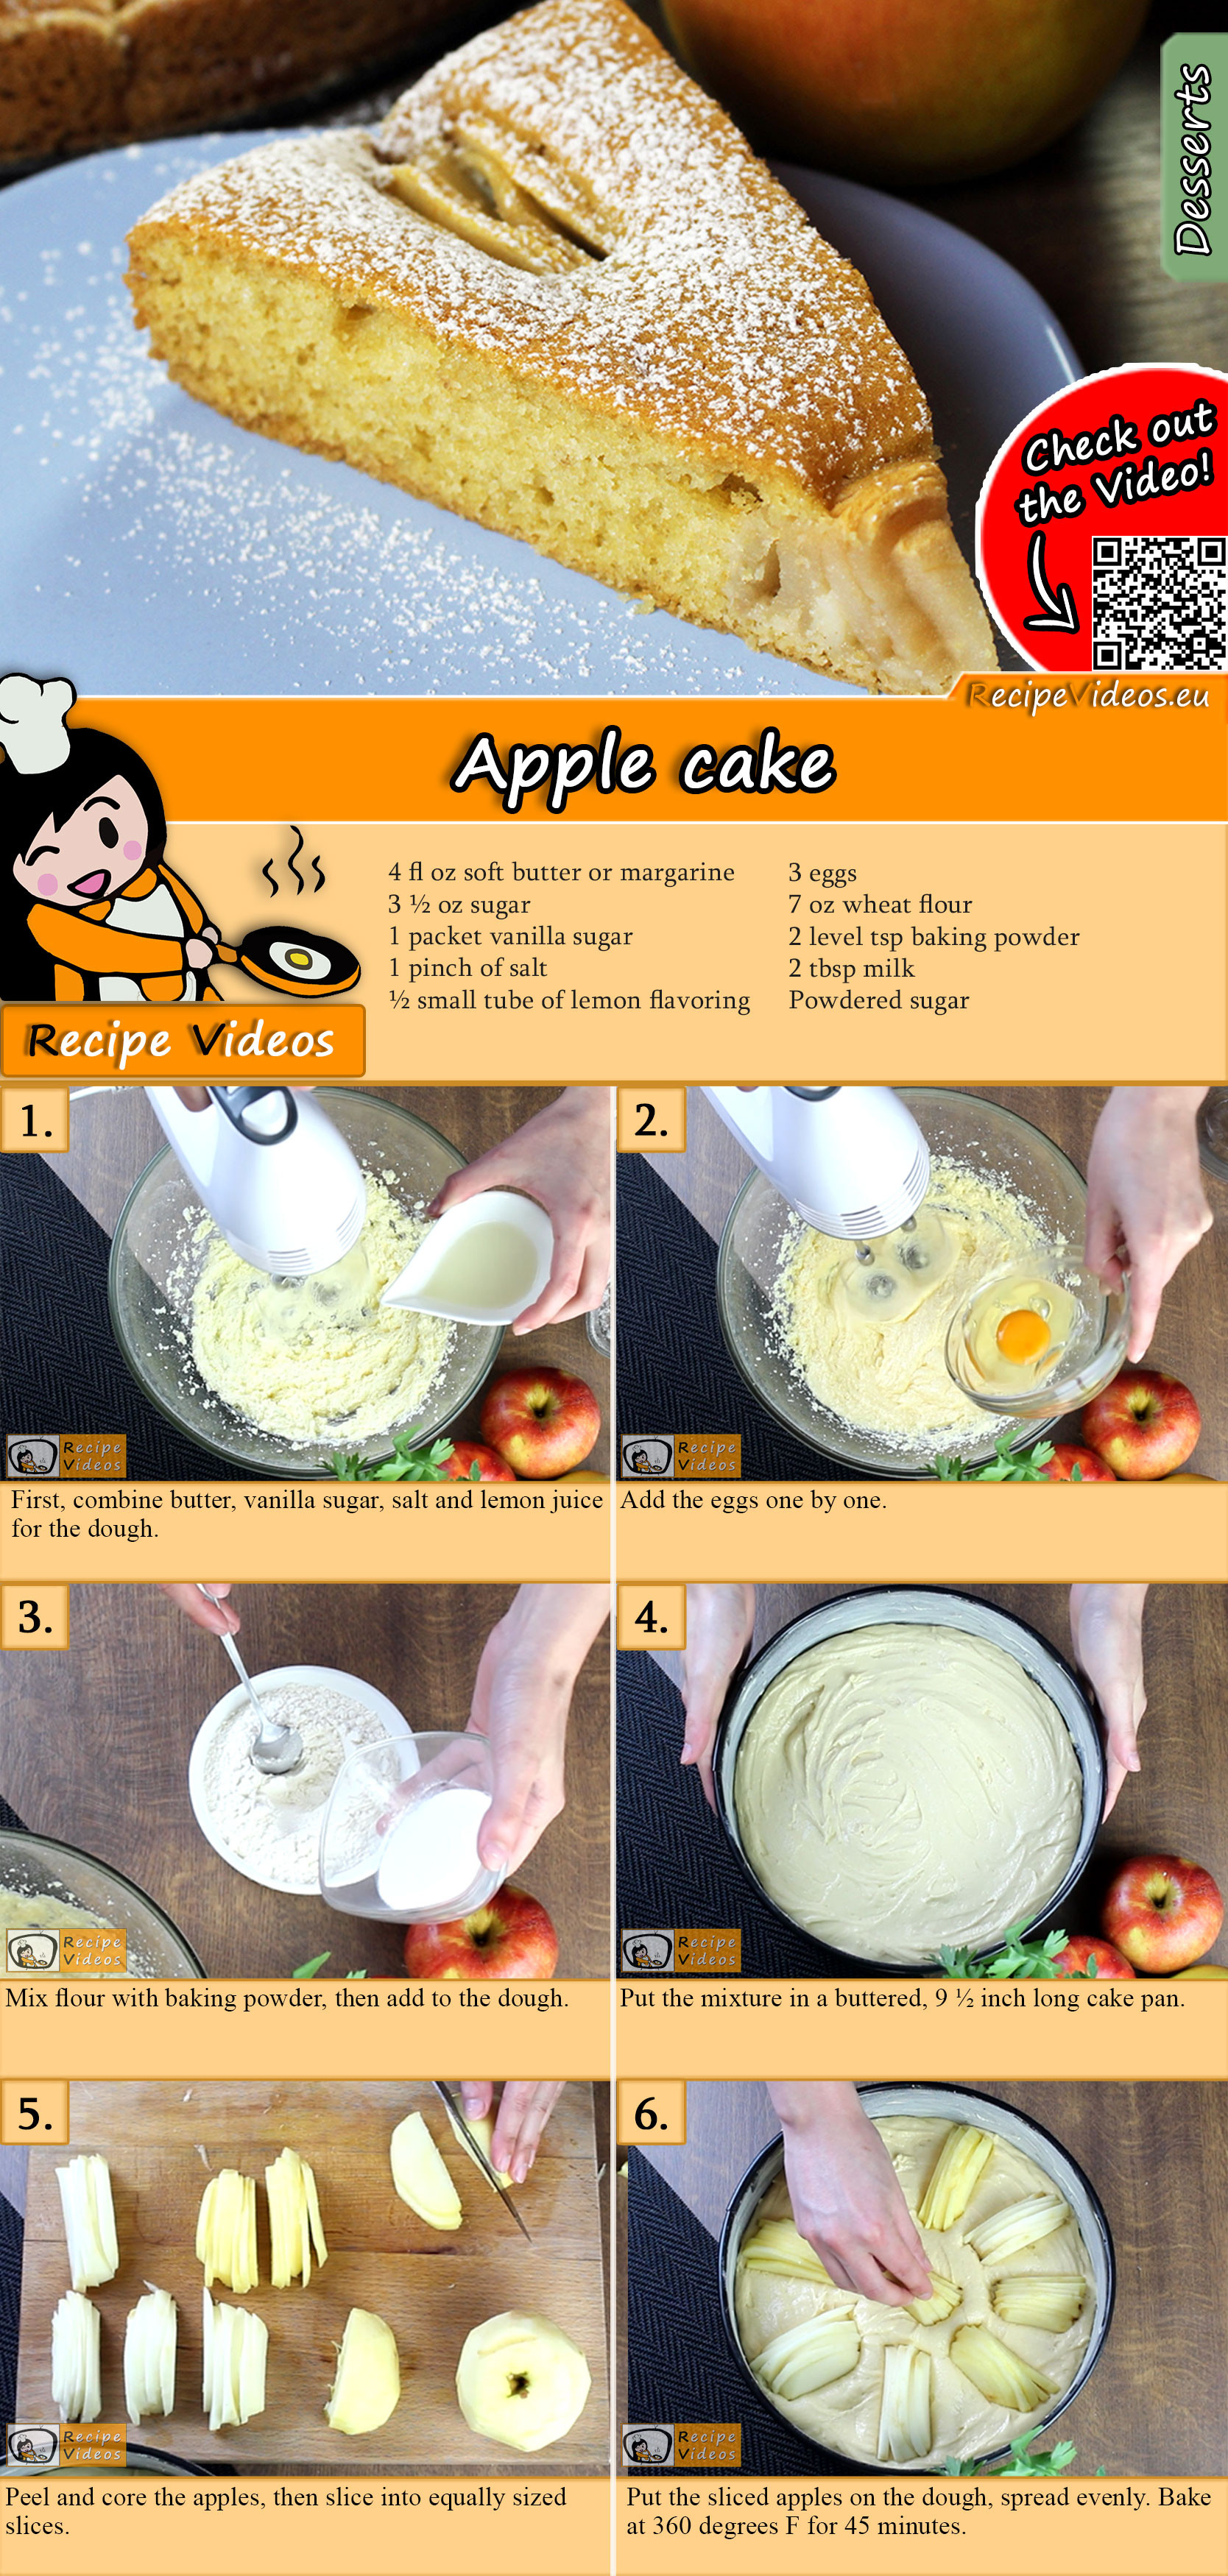 Apple cake recipe with video